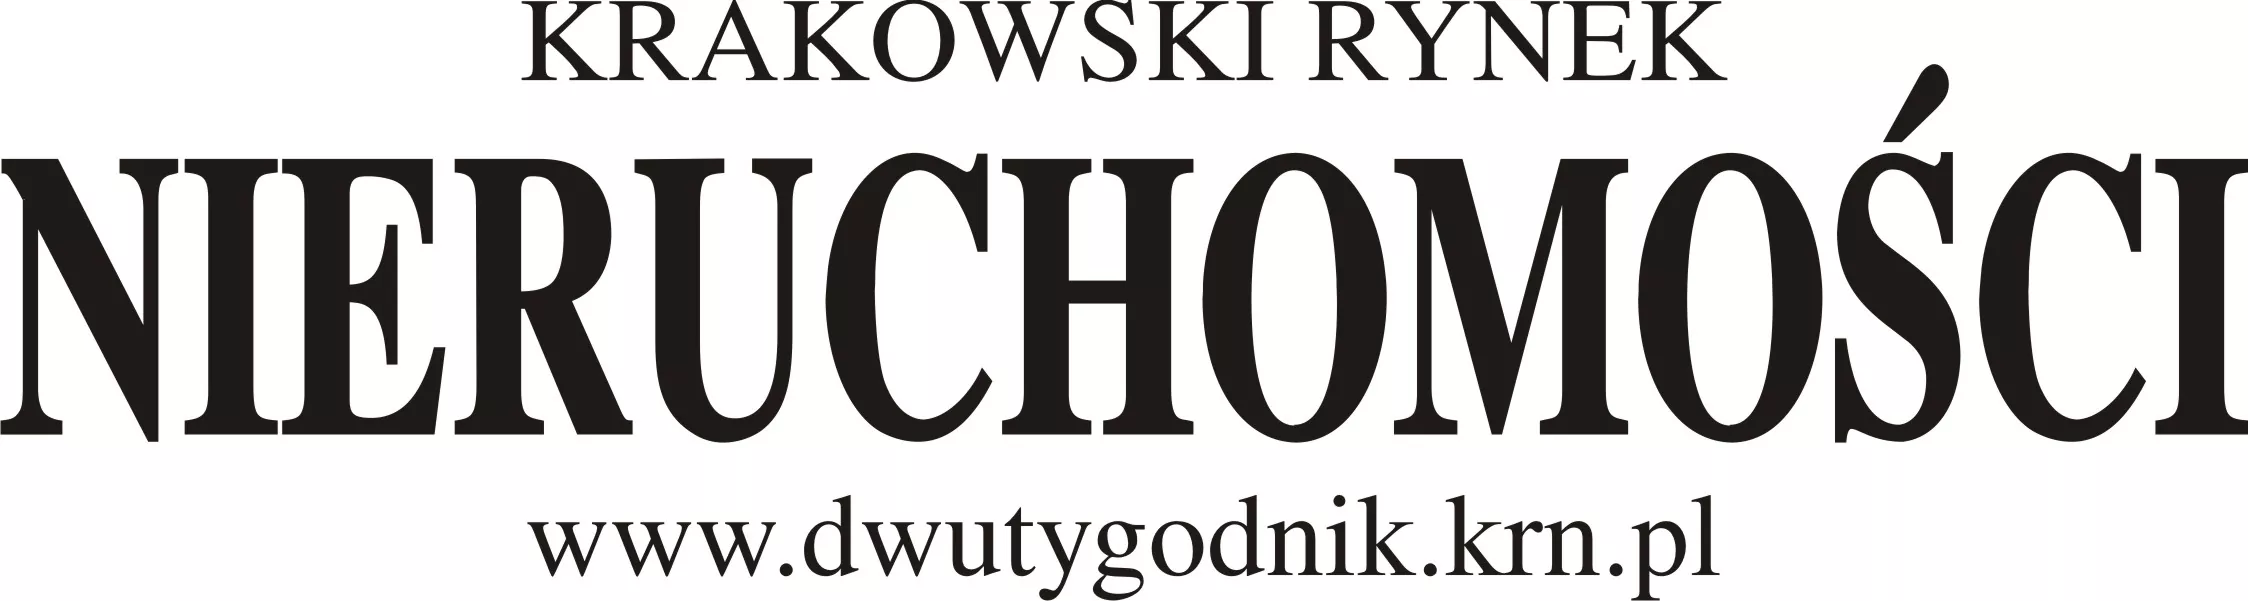 Krakowski Rynek Nieruchomości - Dwutygodnik